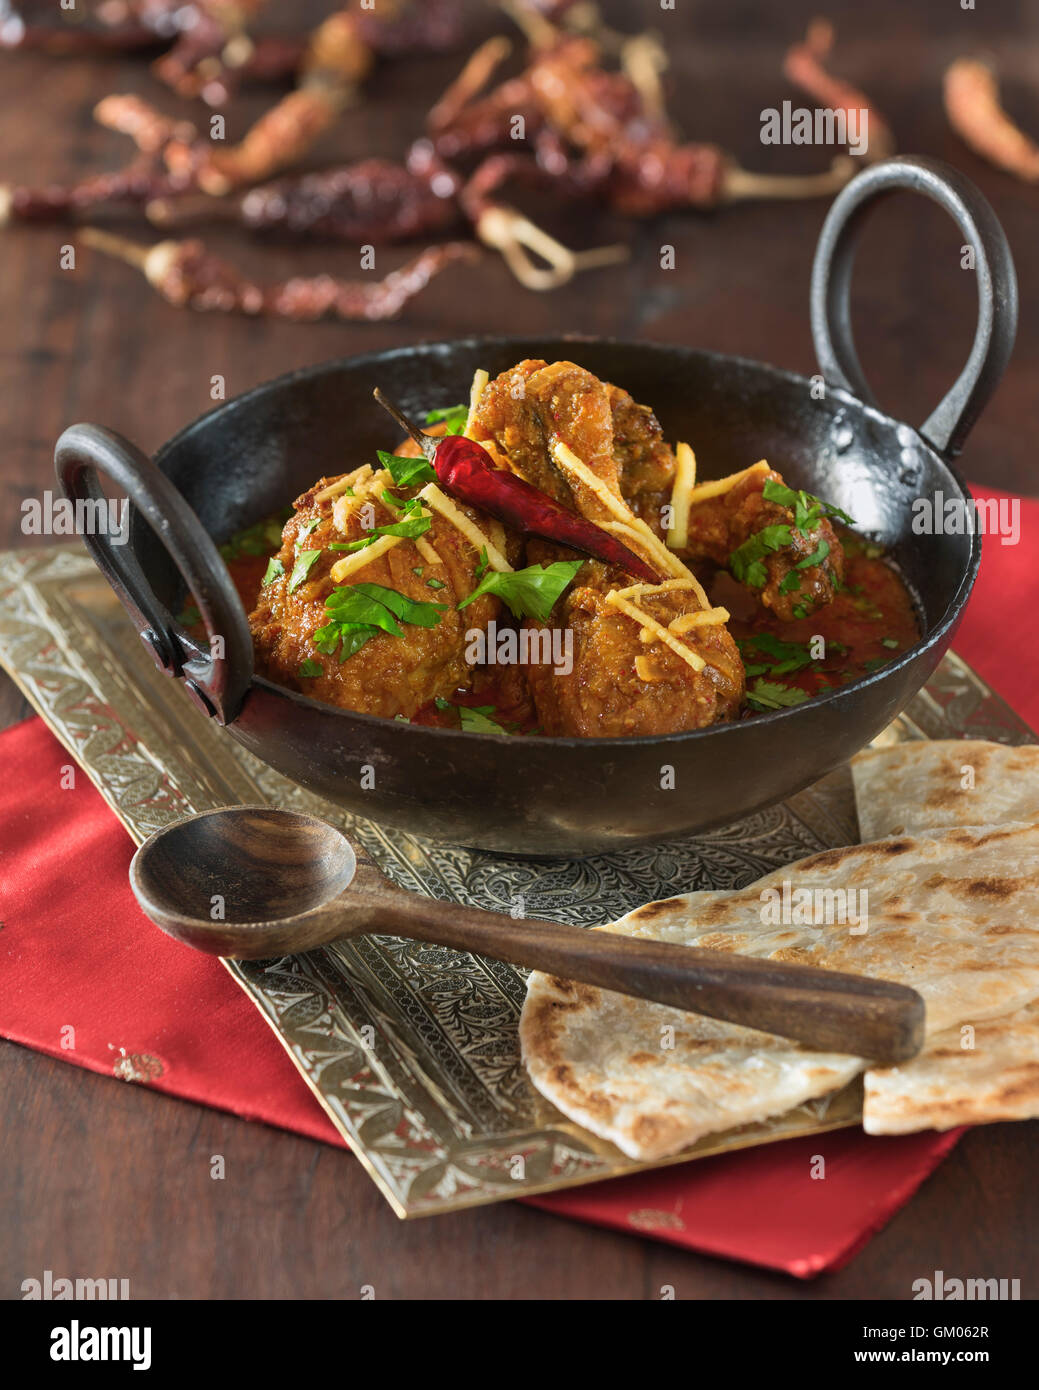 https://c8.alamy.com/comp/GM062R/kadai-chicken-karahi-murgh-food-india-pakistan-GM062R.jpg